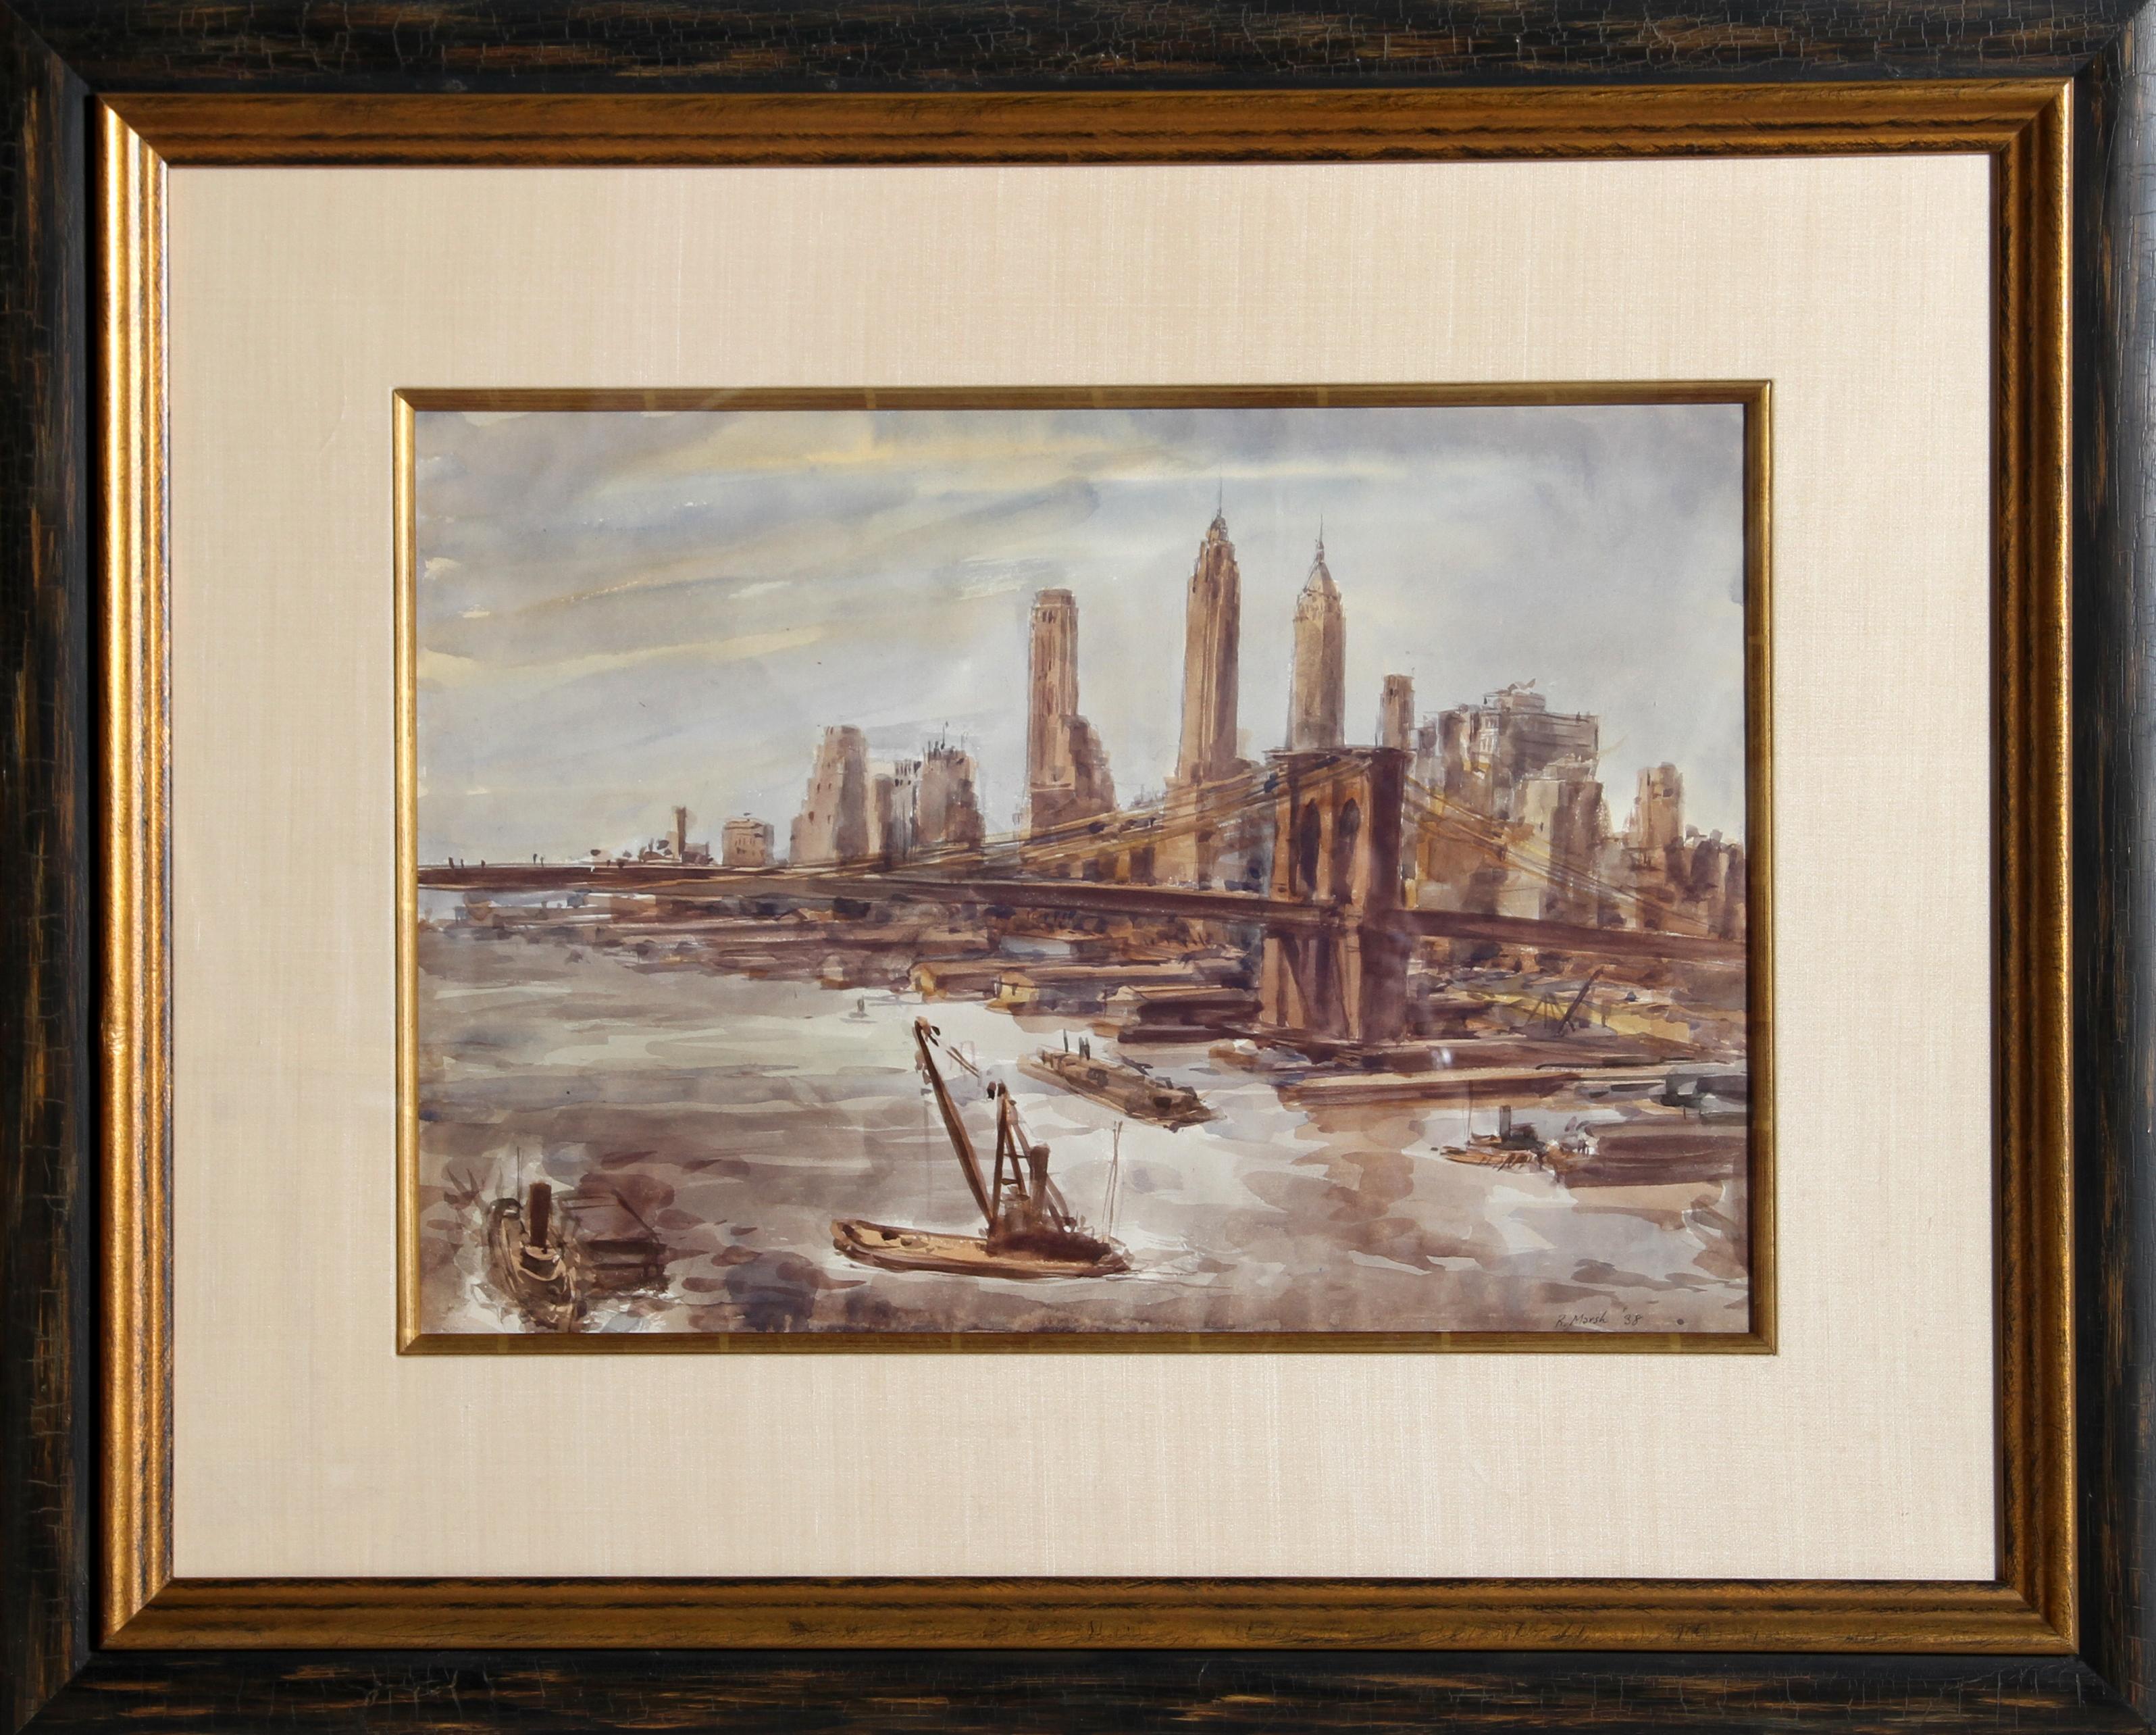 Brooklyn Bridge and Lower Manhattan, Cityscape Watercolor by Reginald Marsh